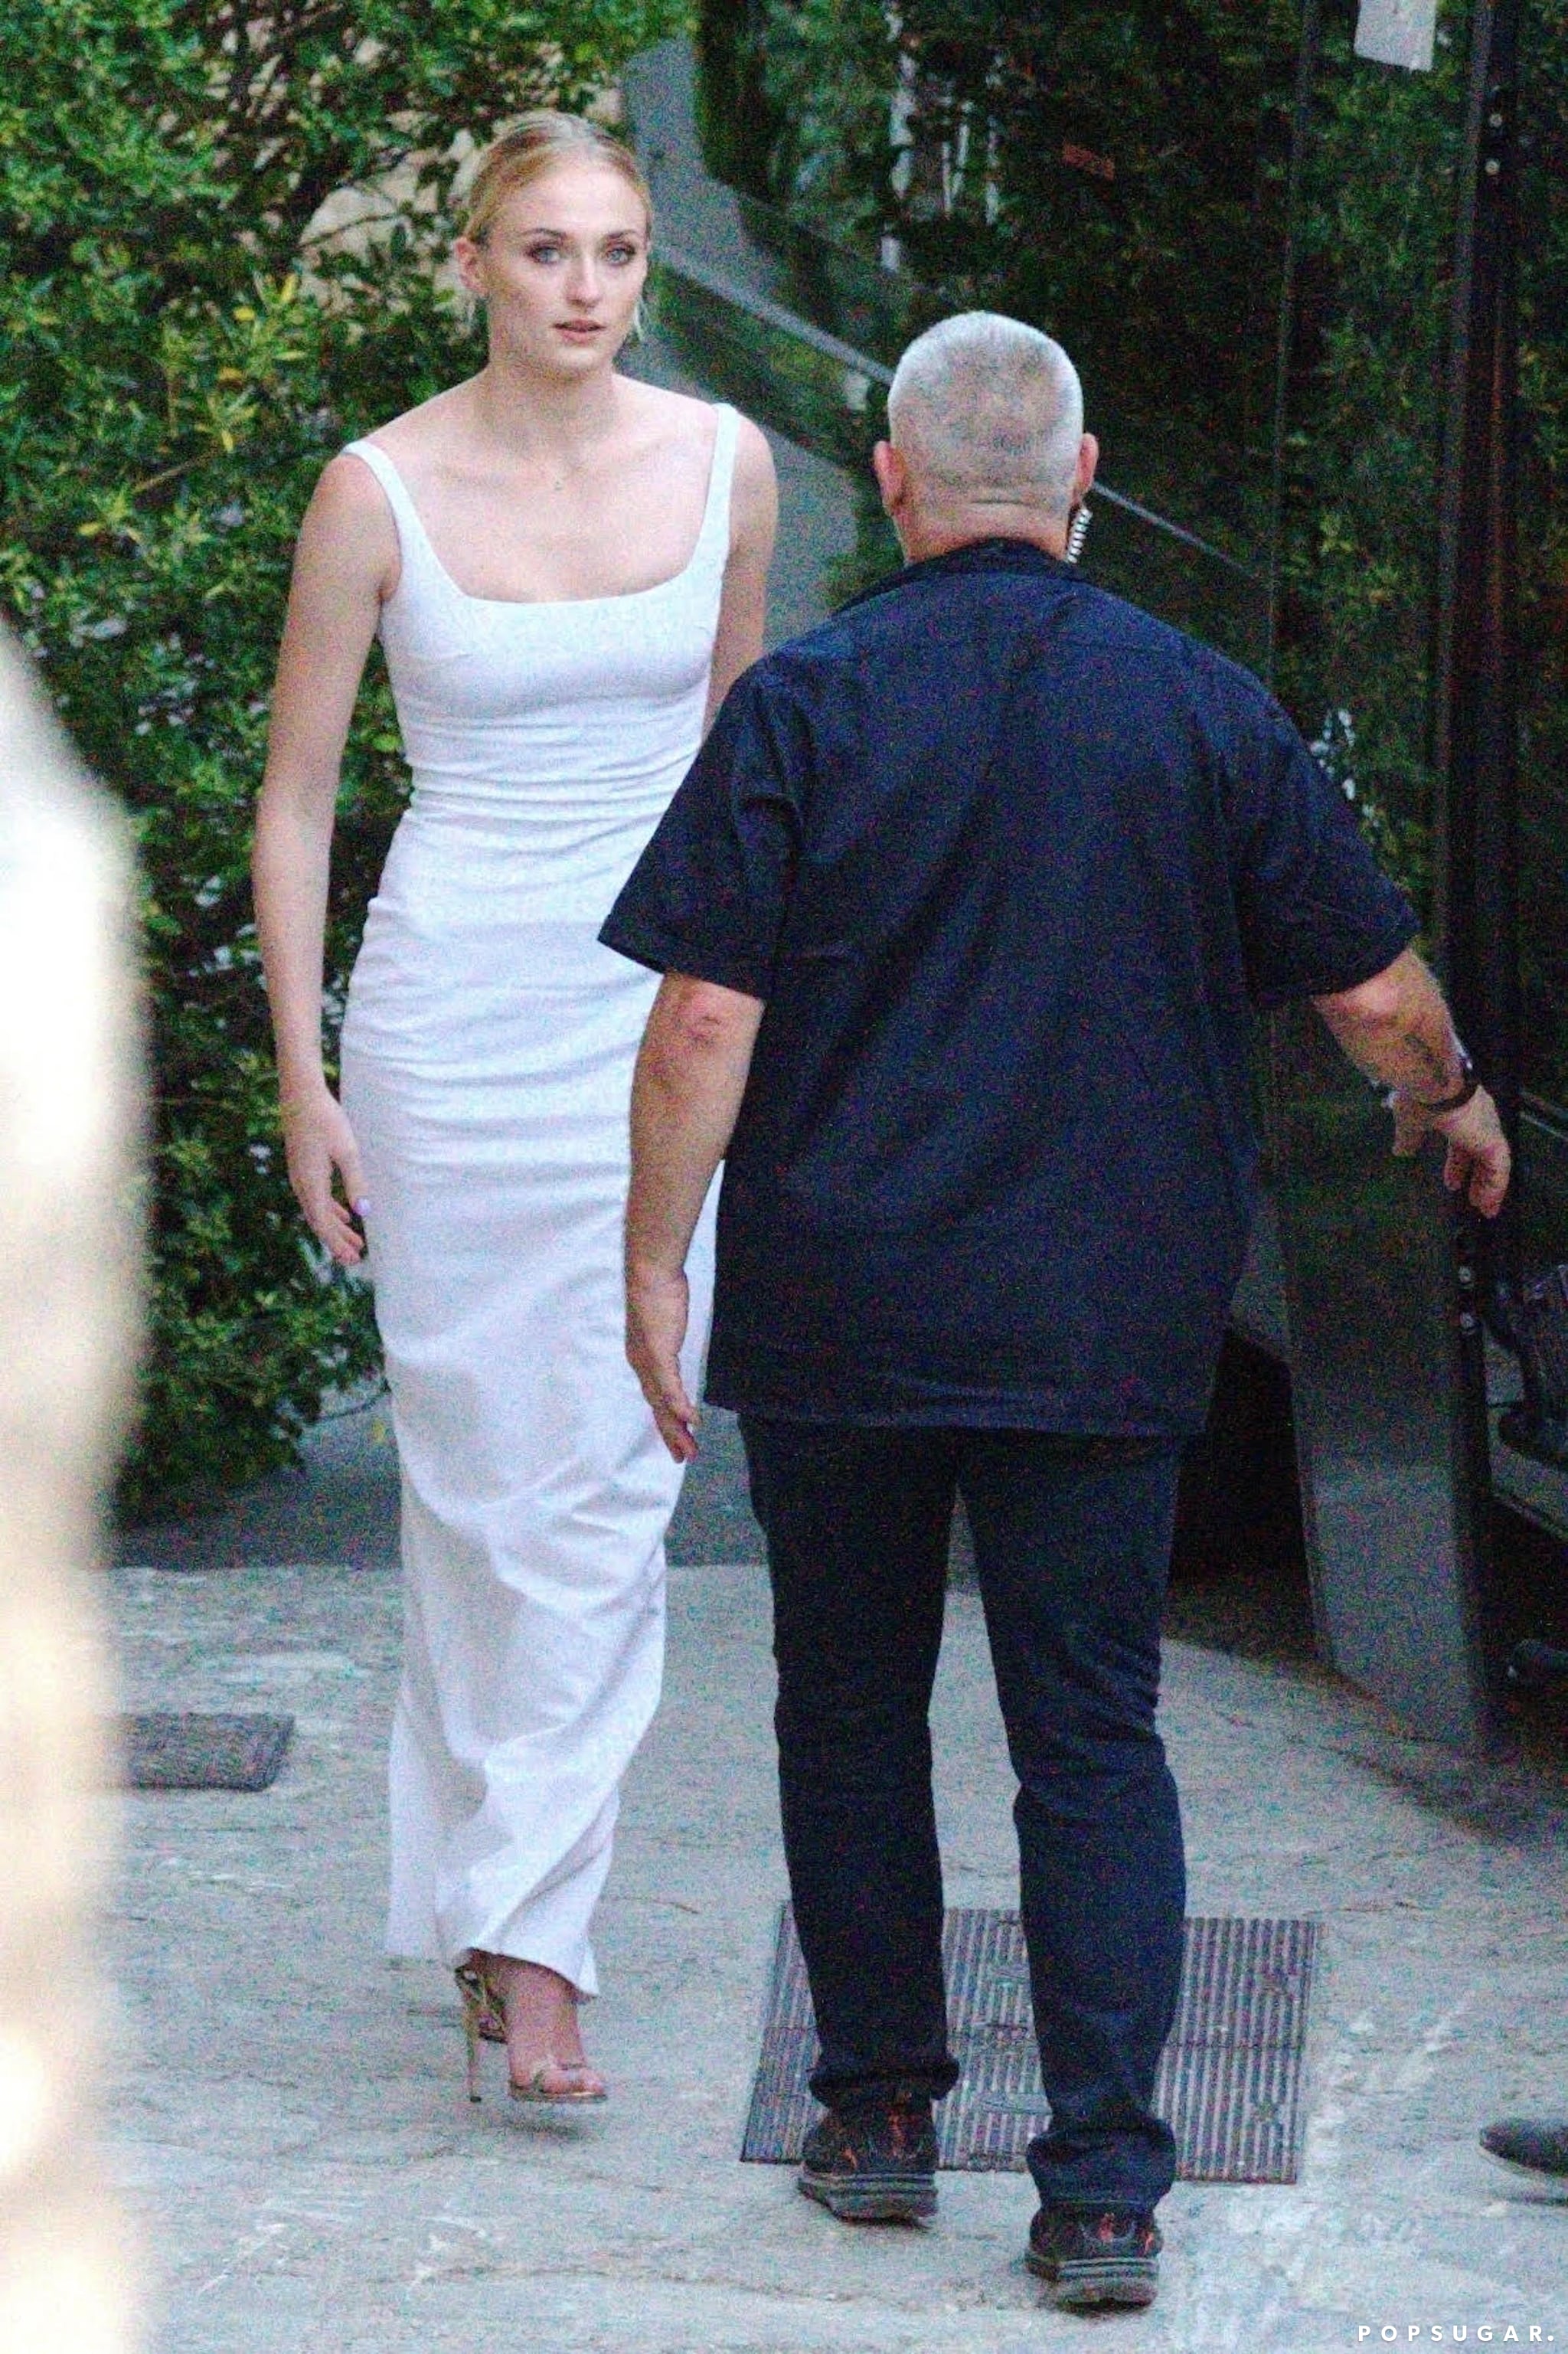 Sophie Turner Looks Stunning In Louis Vuitton Wedding Dress